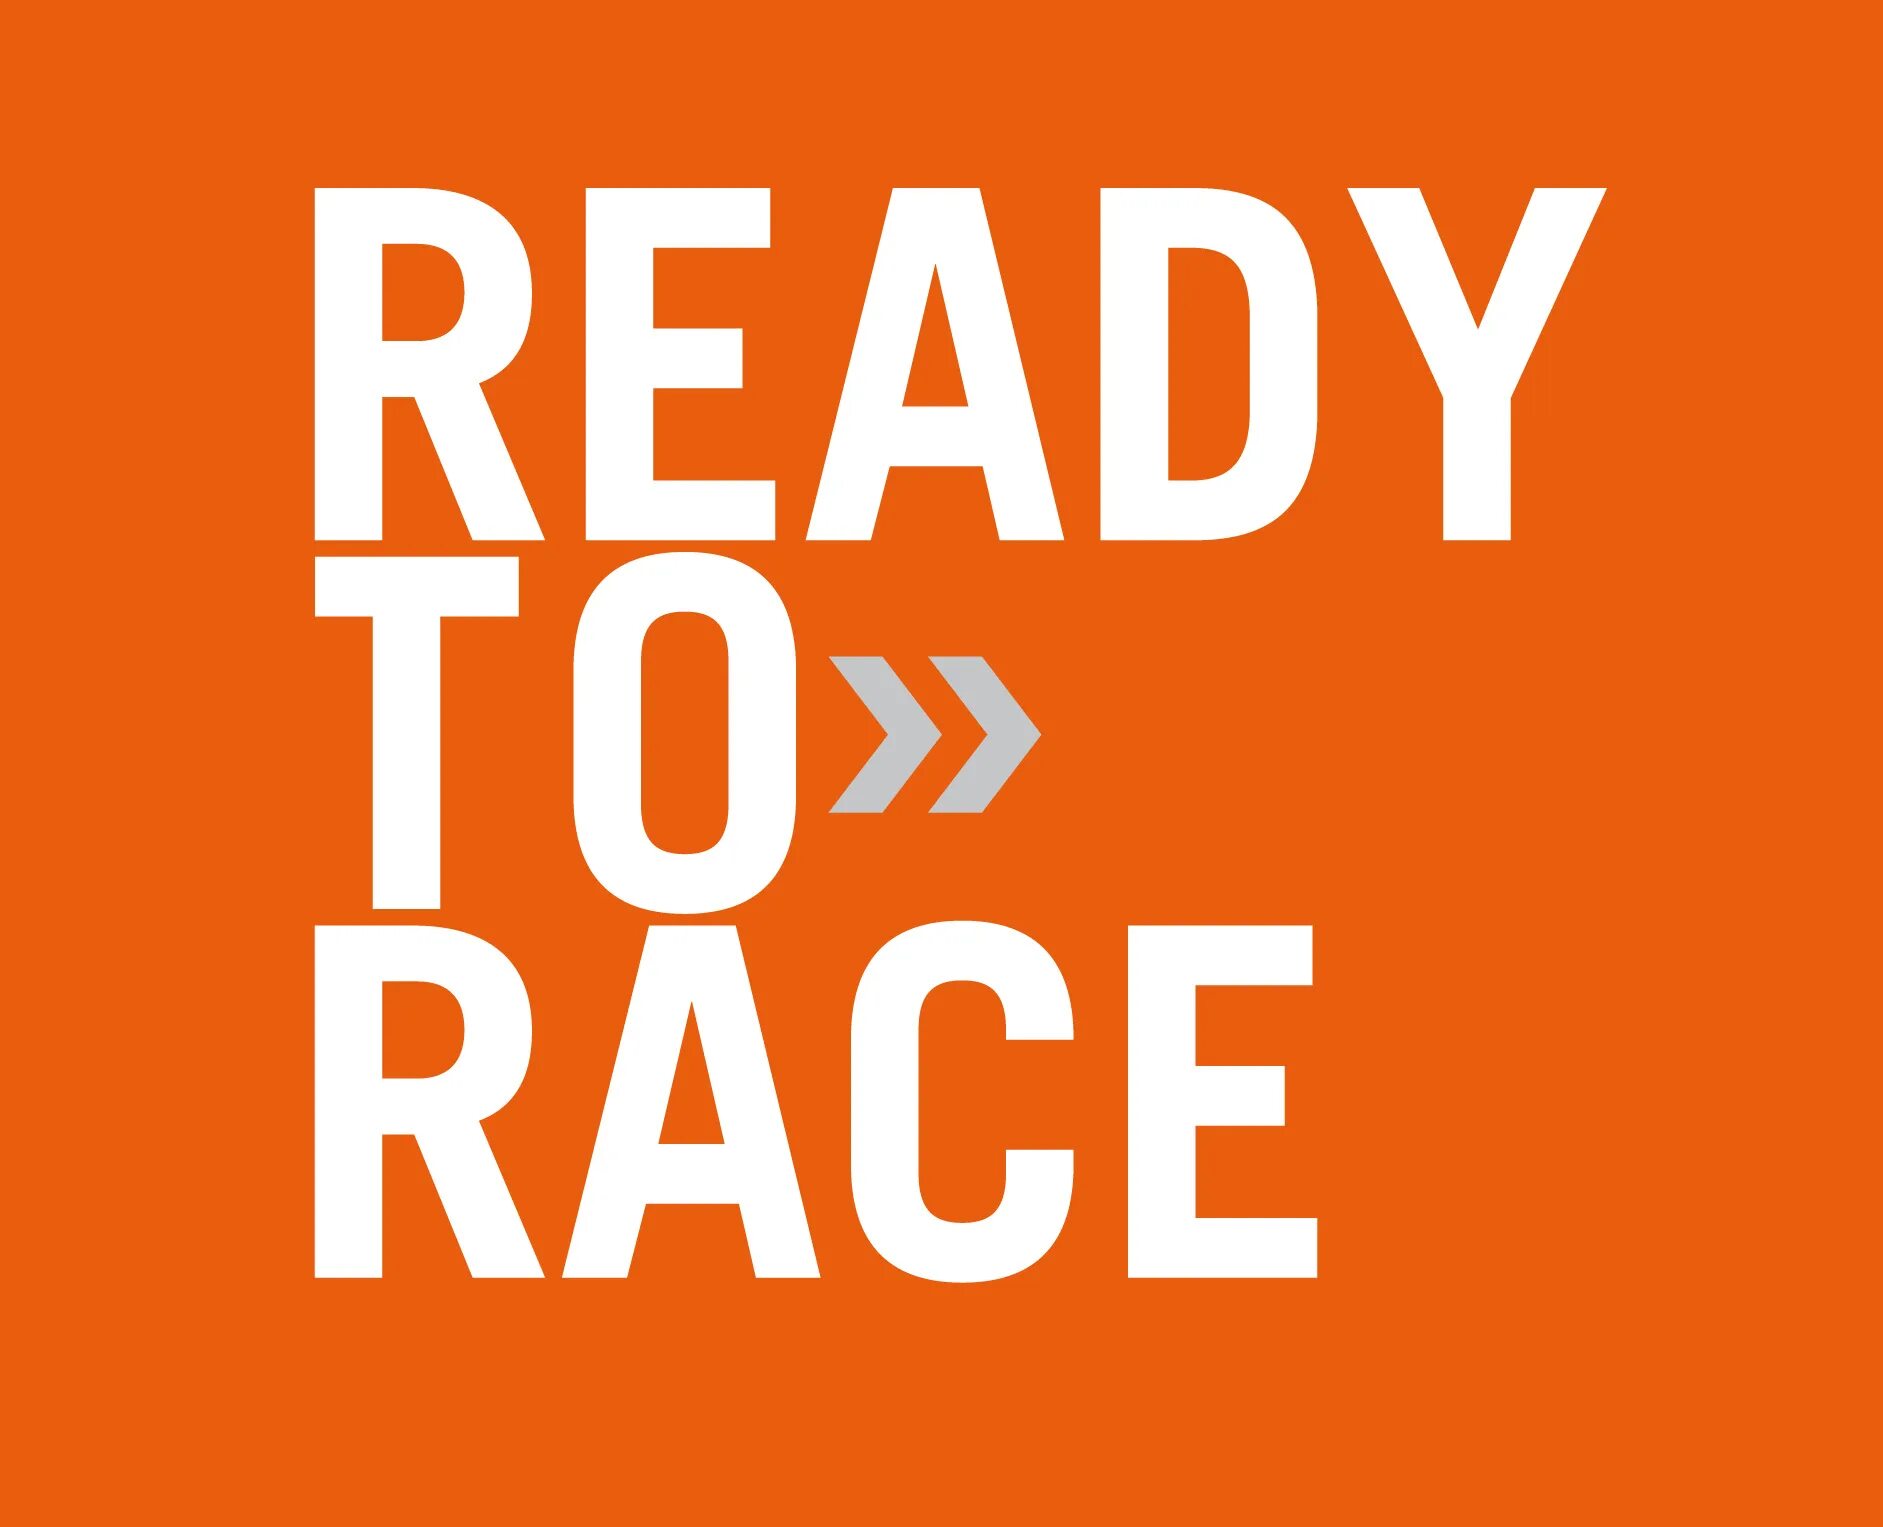 Ready to receive. КТМ ready to Race. Ready to Race наклейка. KTM ready to Race logo. Ready to Race лого.